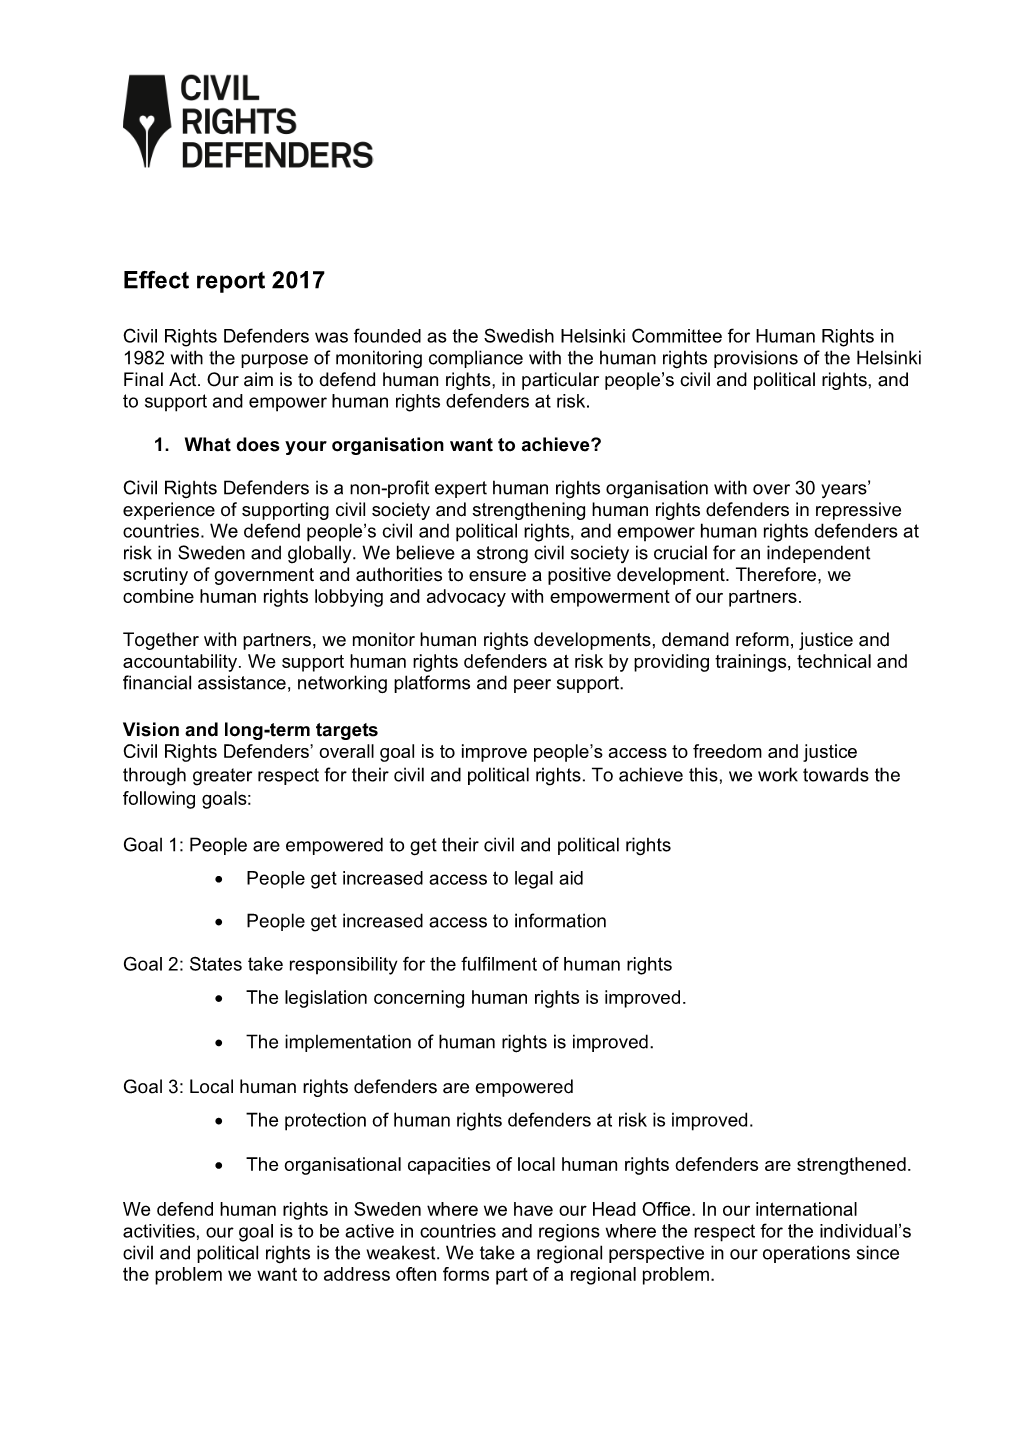 Effect Report 2017